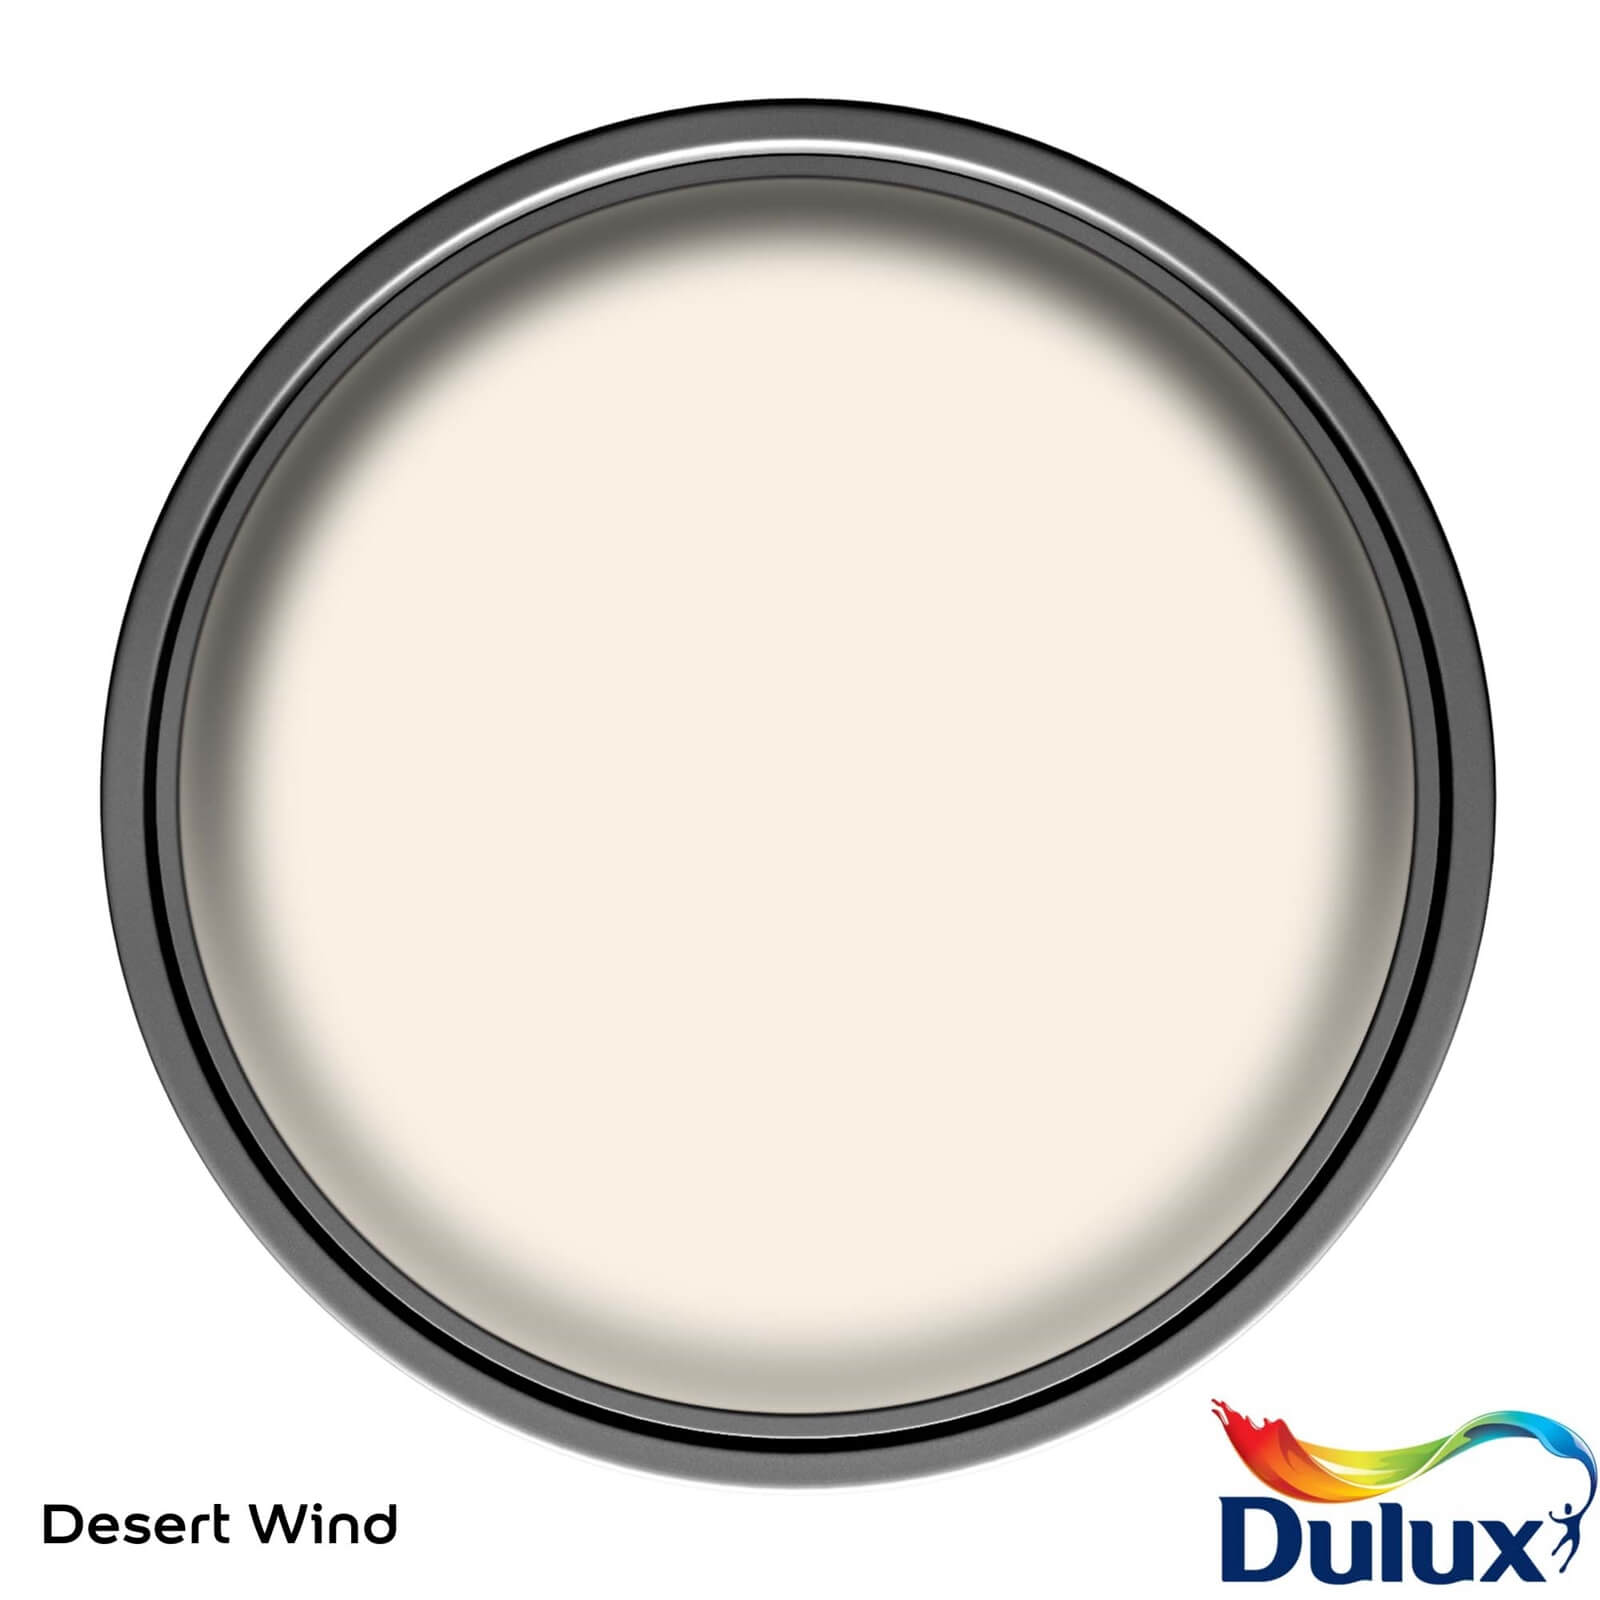 Dulux Light & Space Matt Emulsion Paint Desert Wind - 5L